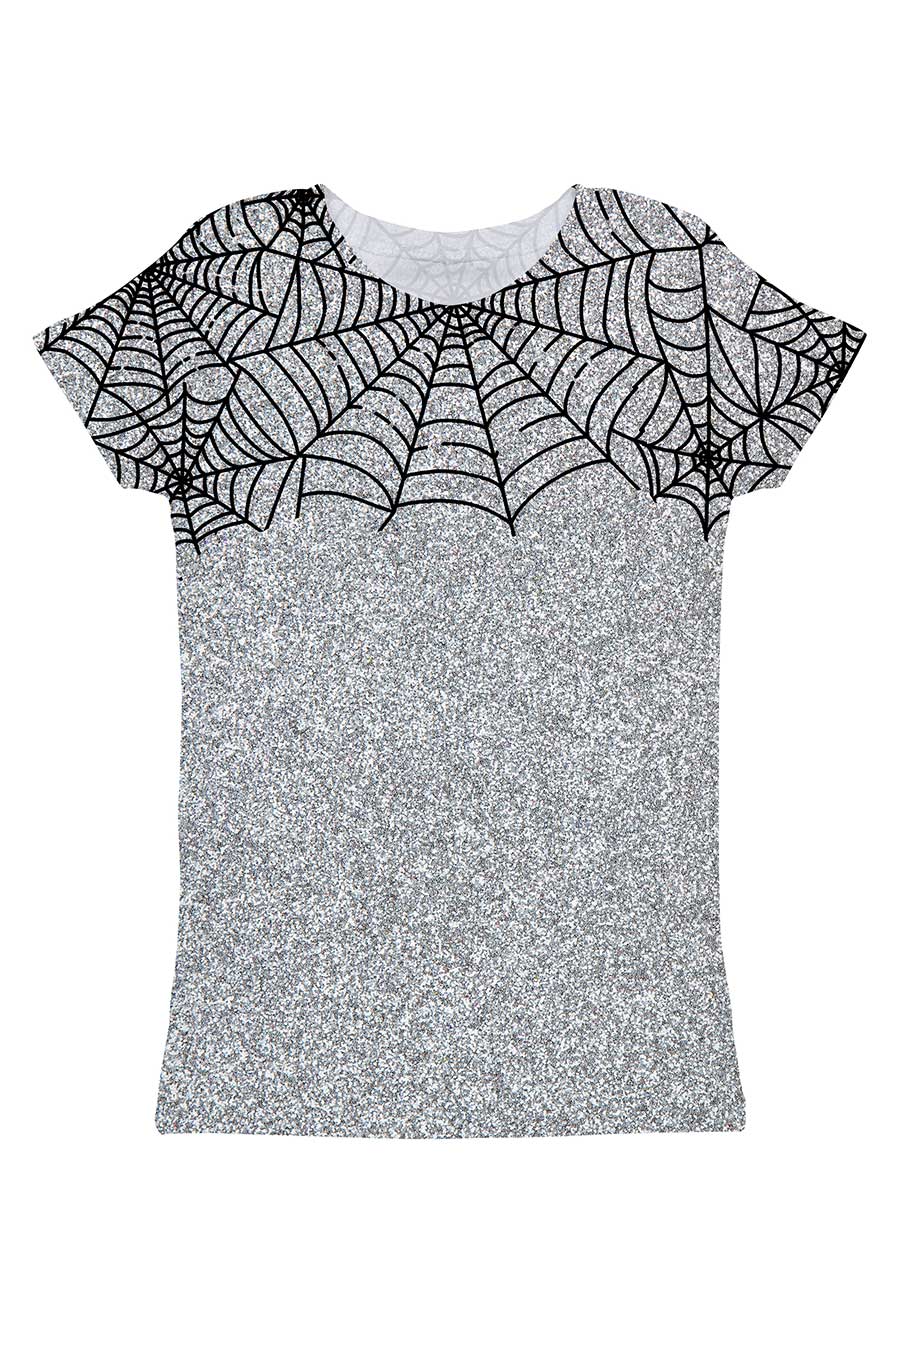 Bugs & Kisses Zoe Silver Grey Spider Web Glitter Print T-Shirt - Women - Pineapple Clothing